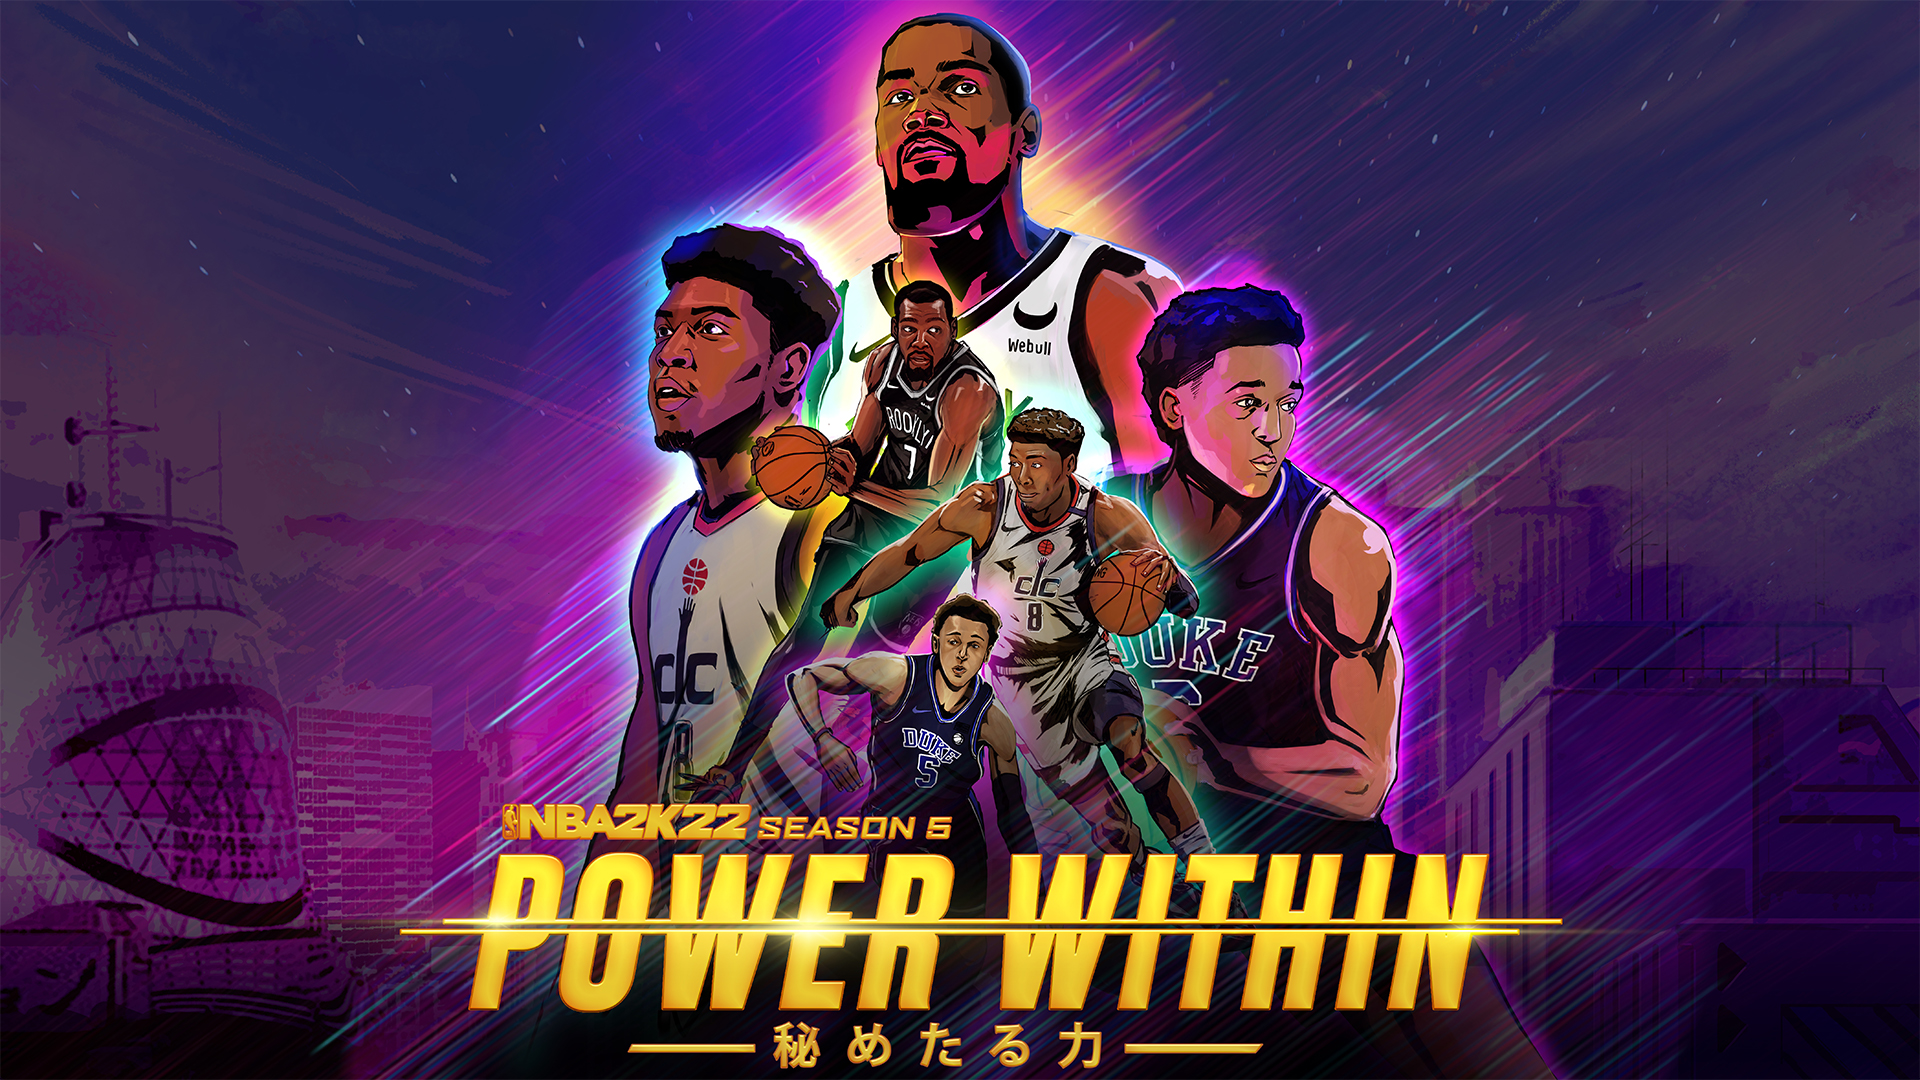 NBA 2K22 Season 5 Power Within